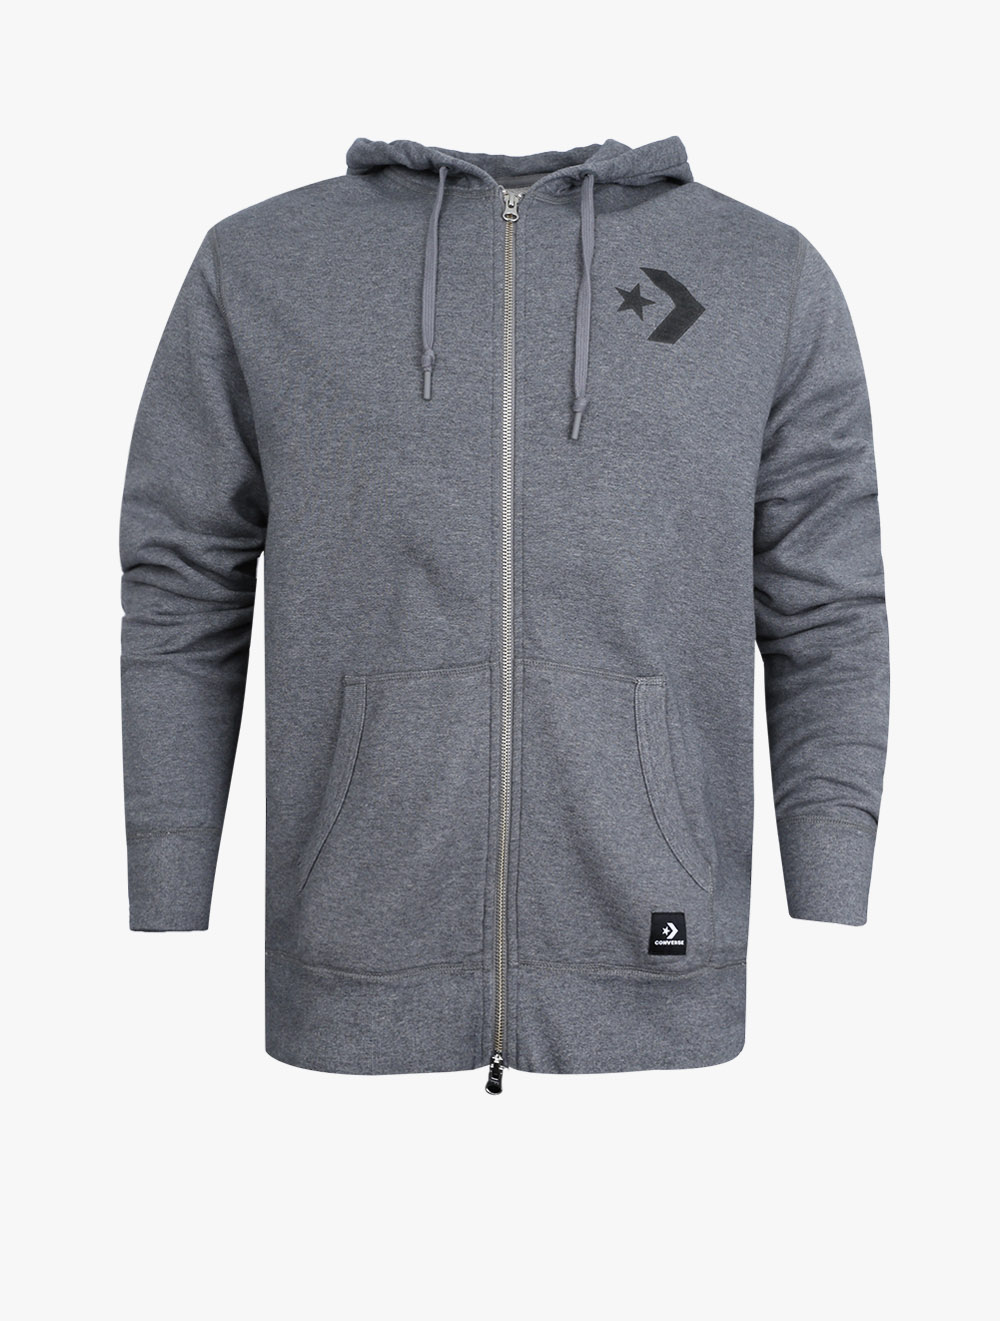 converse essentials zip hoodie